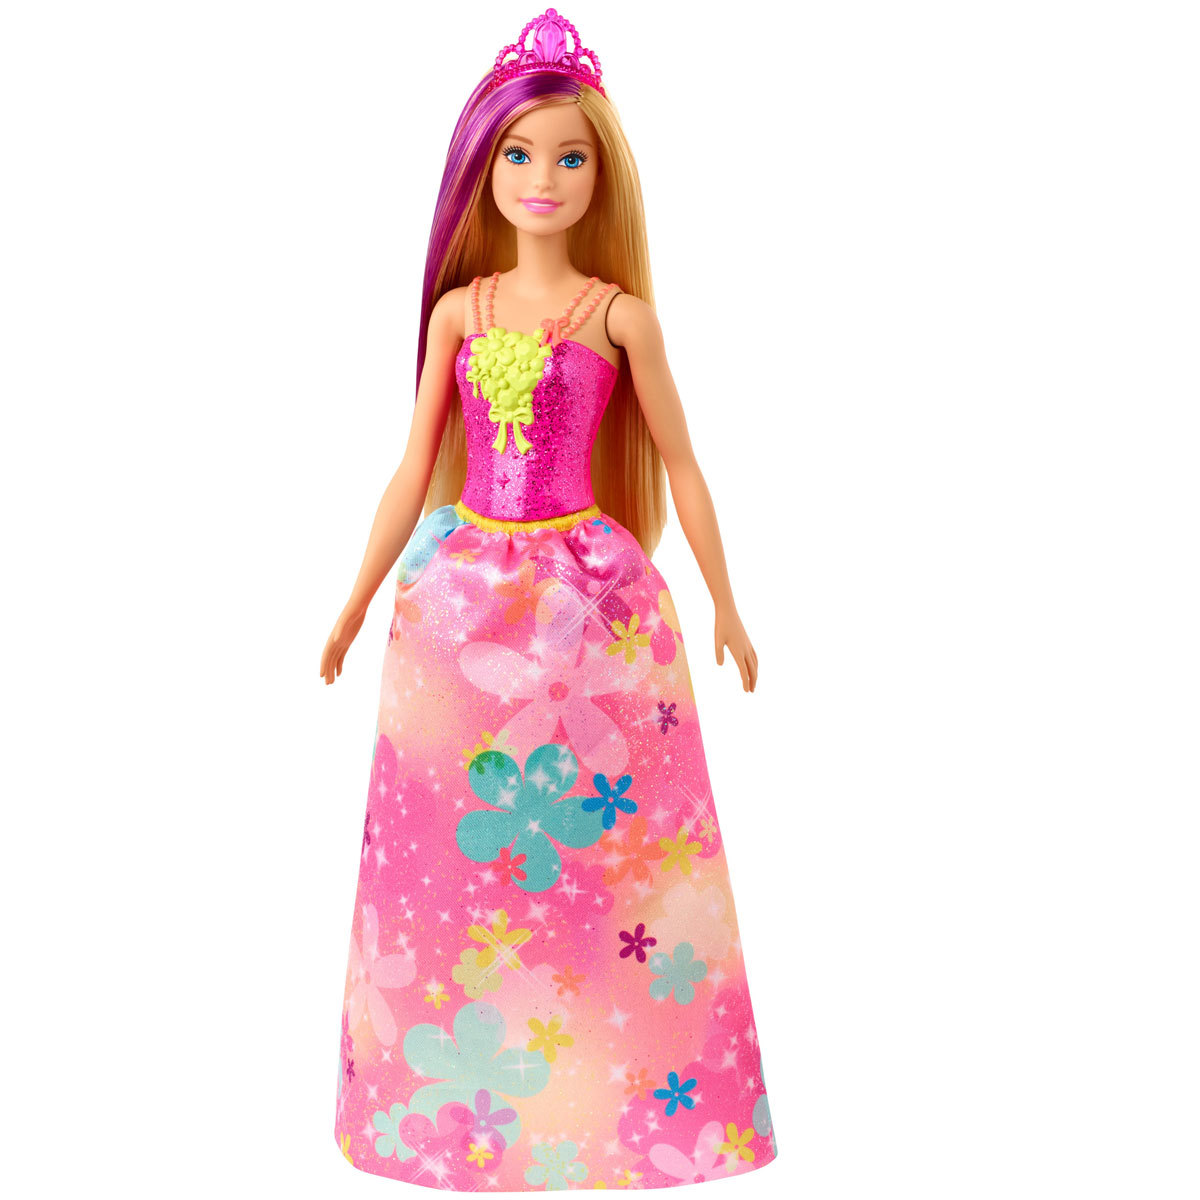 Barbie Dreamtopia Princess Doll Blonde Hair And Flower Dress